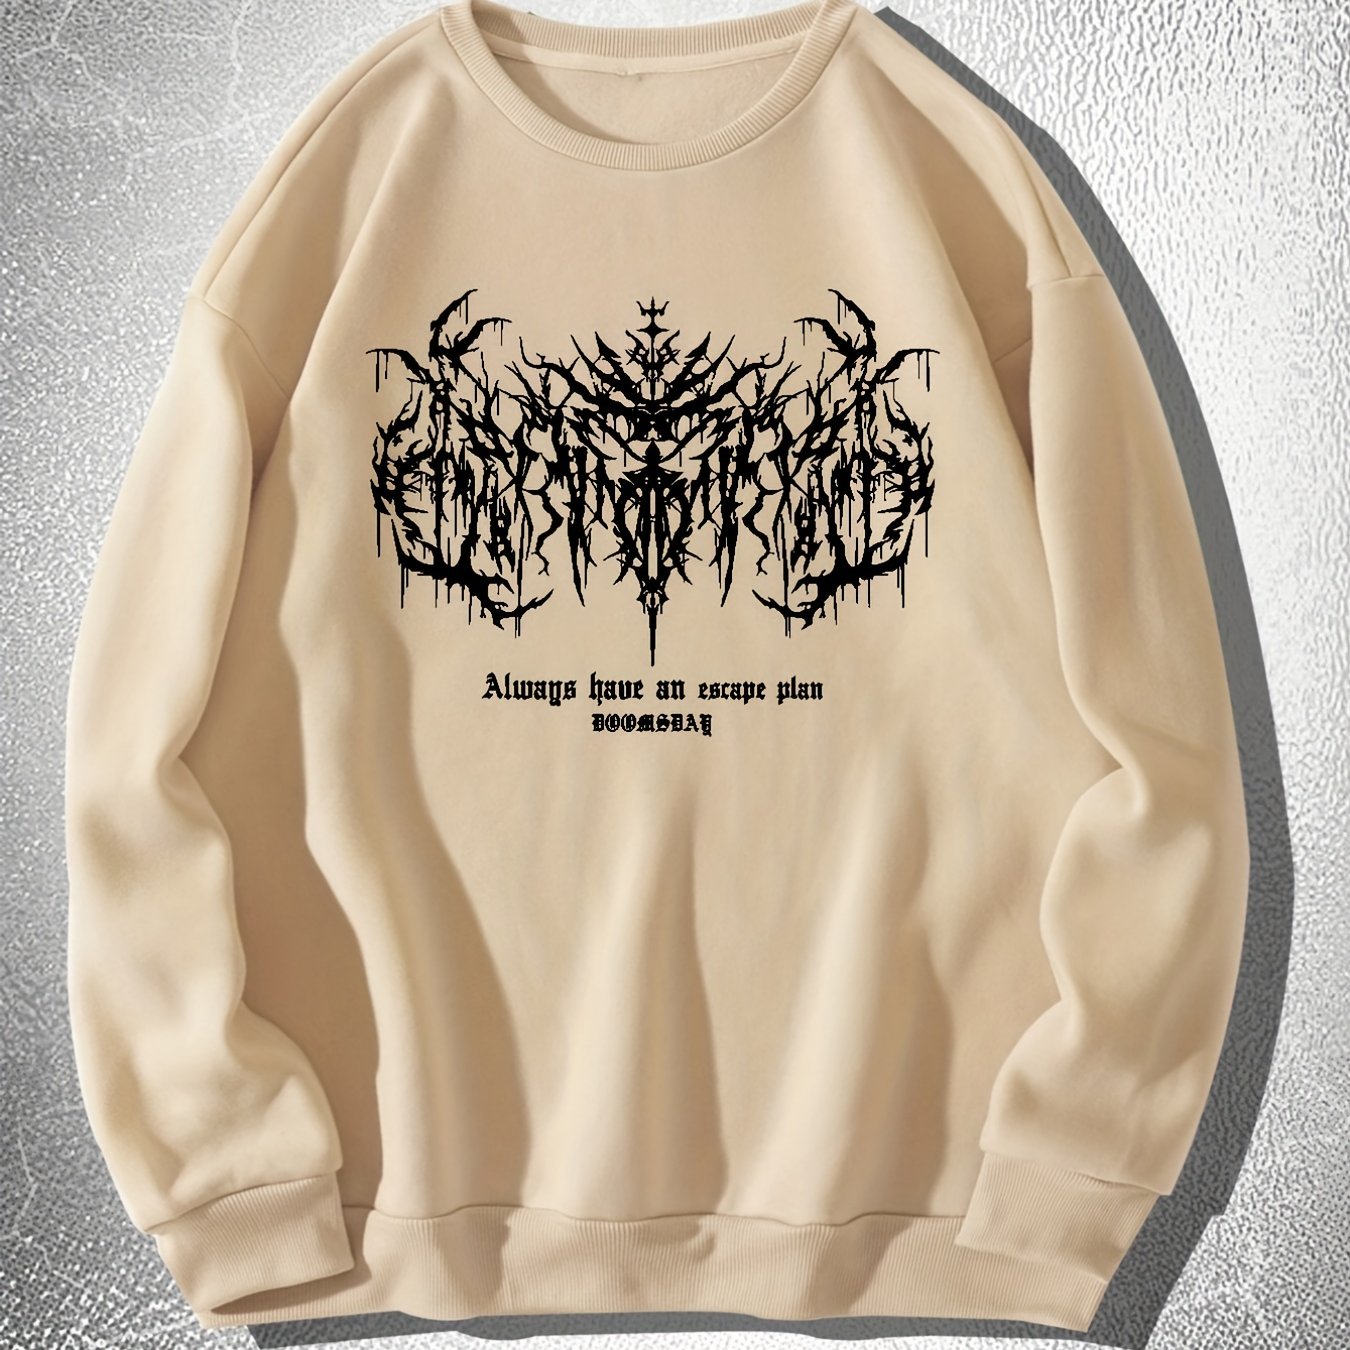 Vzyzv y2k Skeleton & Thorns Print Sweatshirt, Men's Casual Graphic Design Middle Stretch Crew Neck Pullover Sweatshirt For Autumn Winter